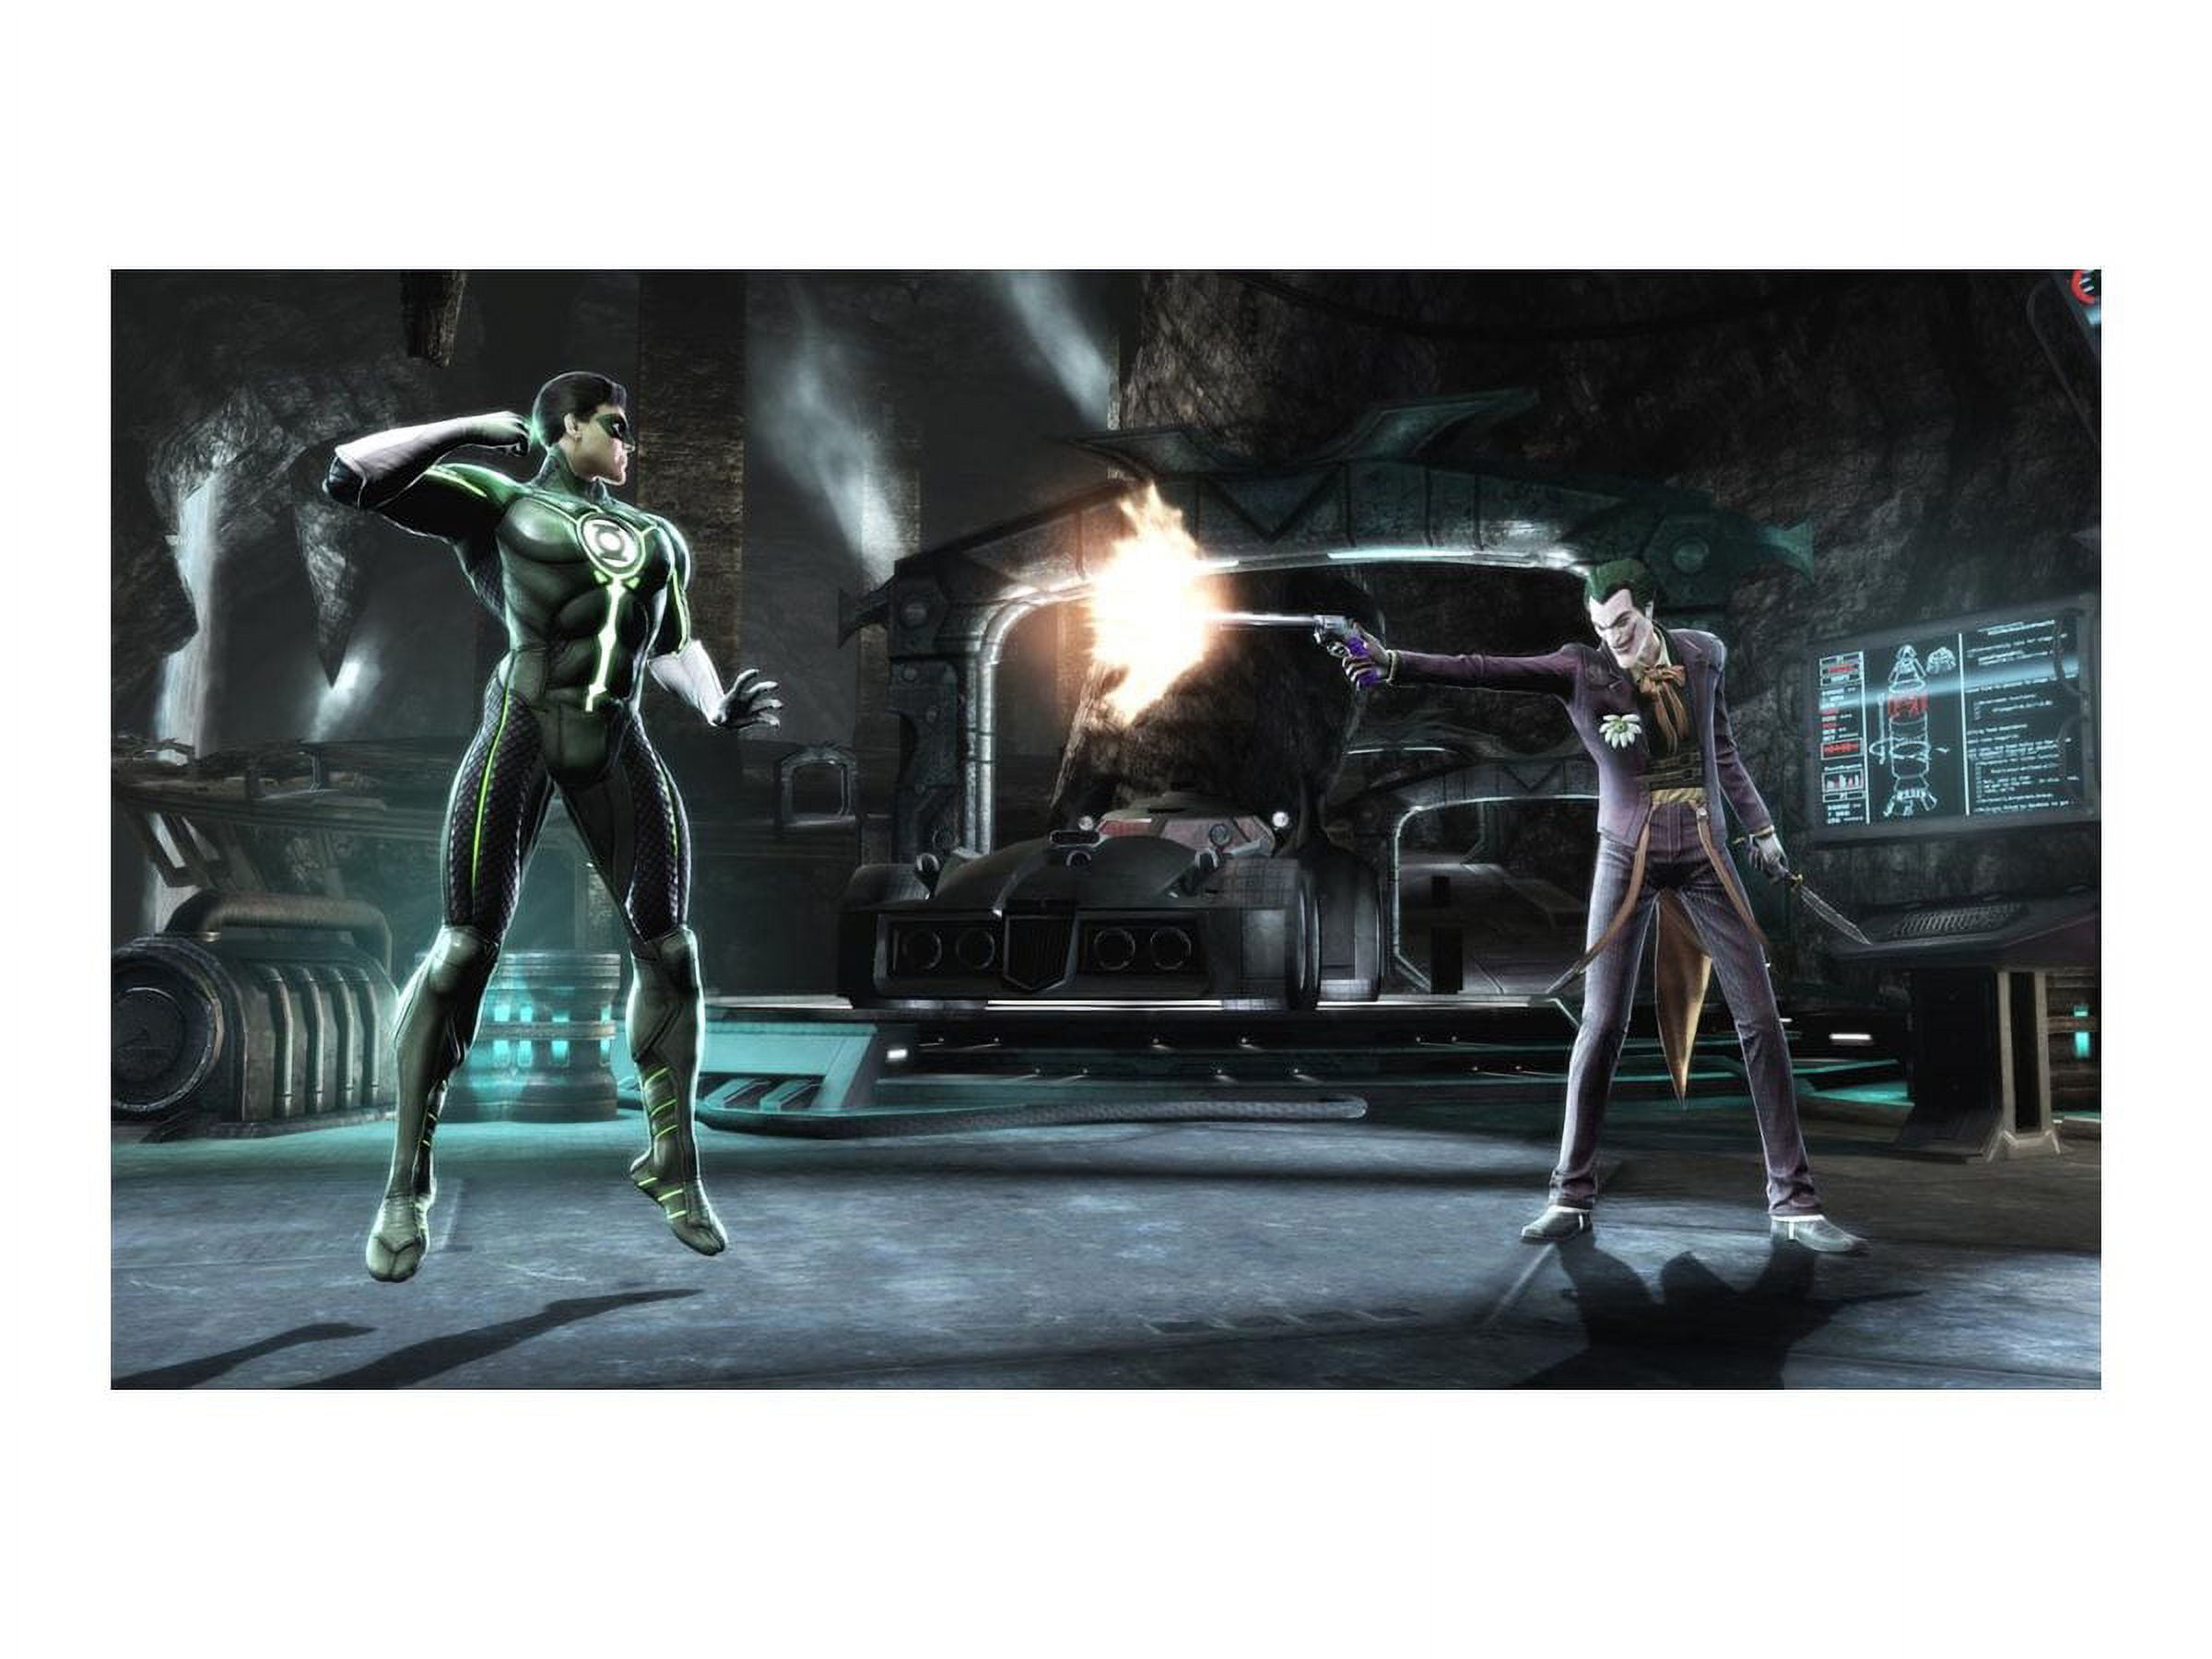 Injustice: Gods Among Us - Martian Manhunter Box Shot for Xbox 360 -  GameFAQs